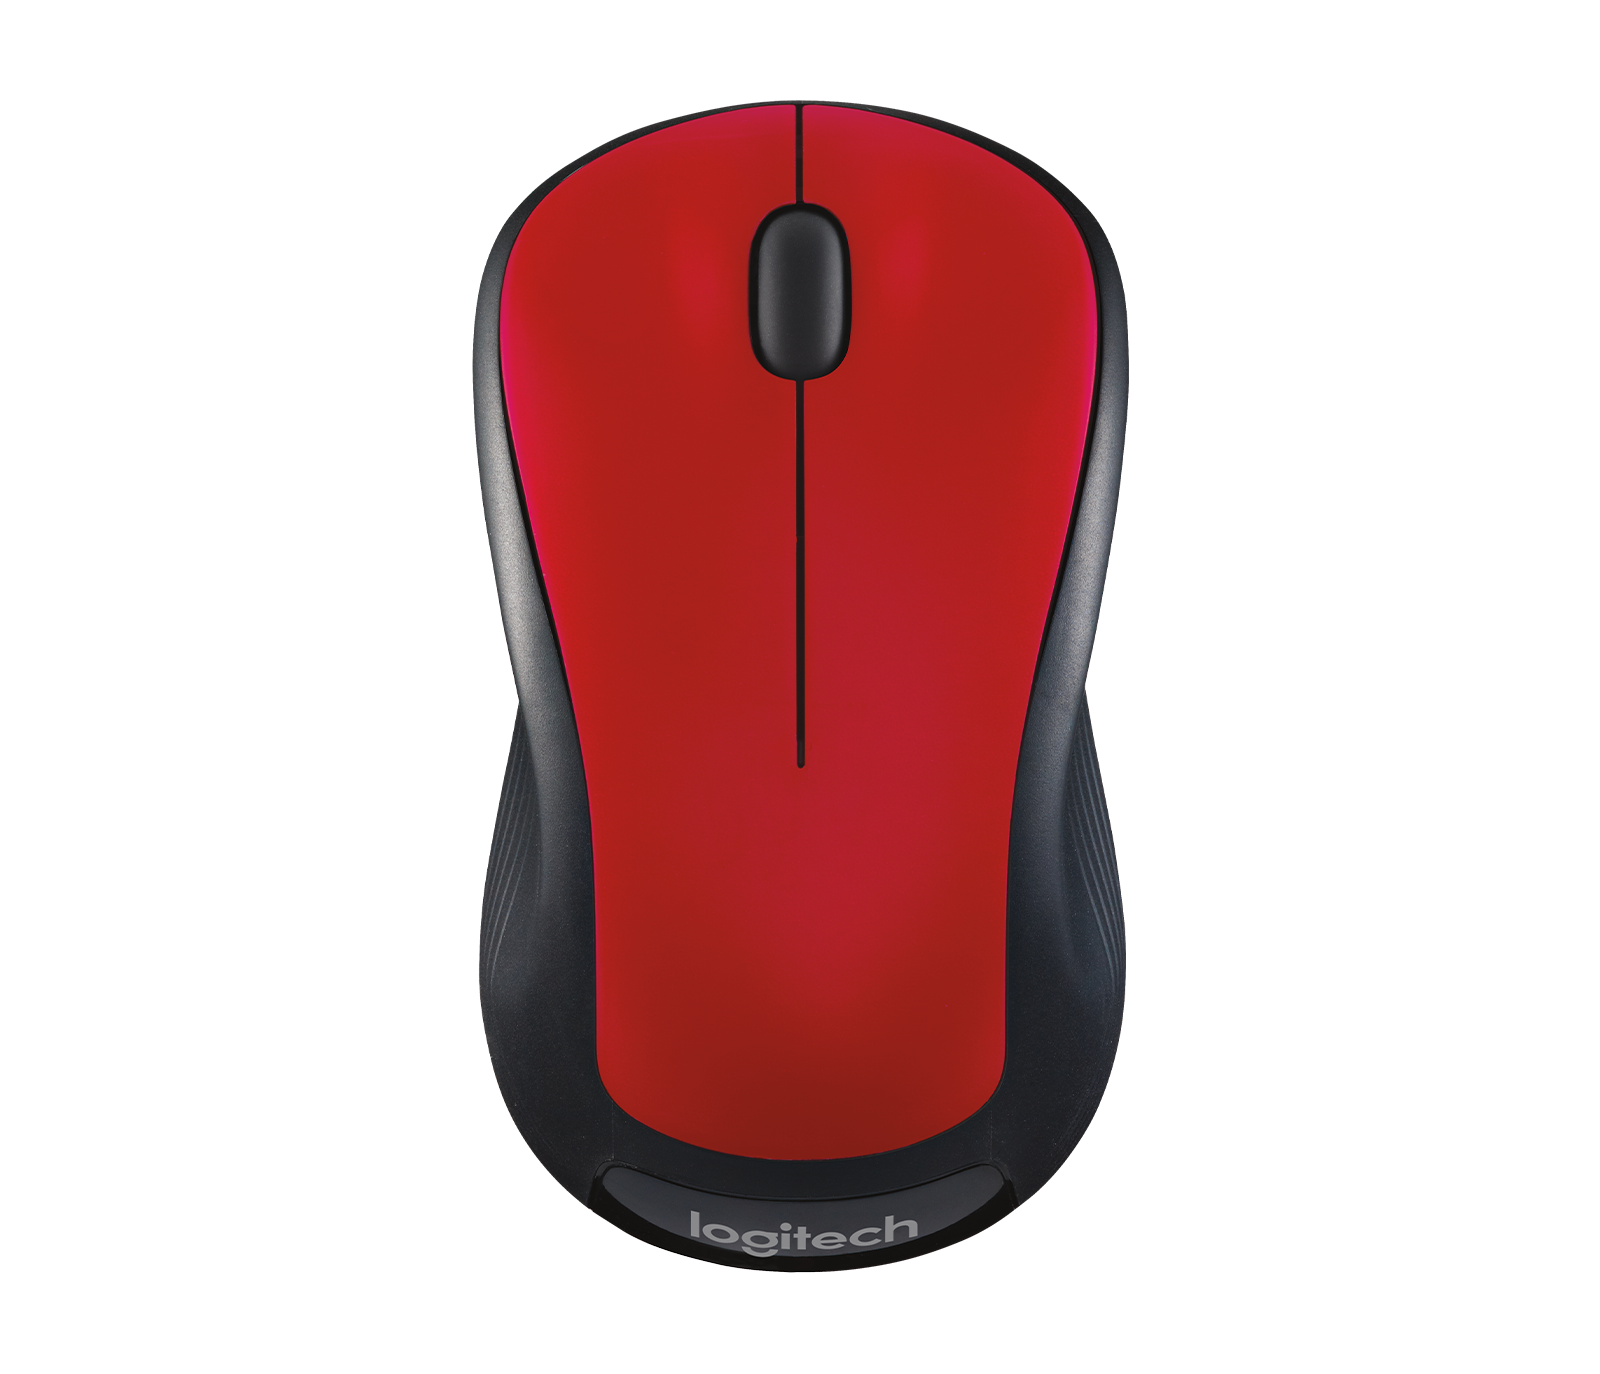 rigtig meget Elendighed præmedicinering Logitech M310 Wireless Mouse with Ambidextrous Design